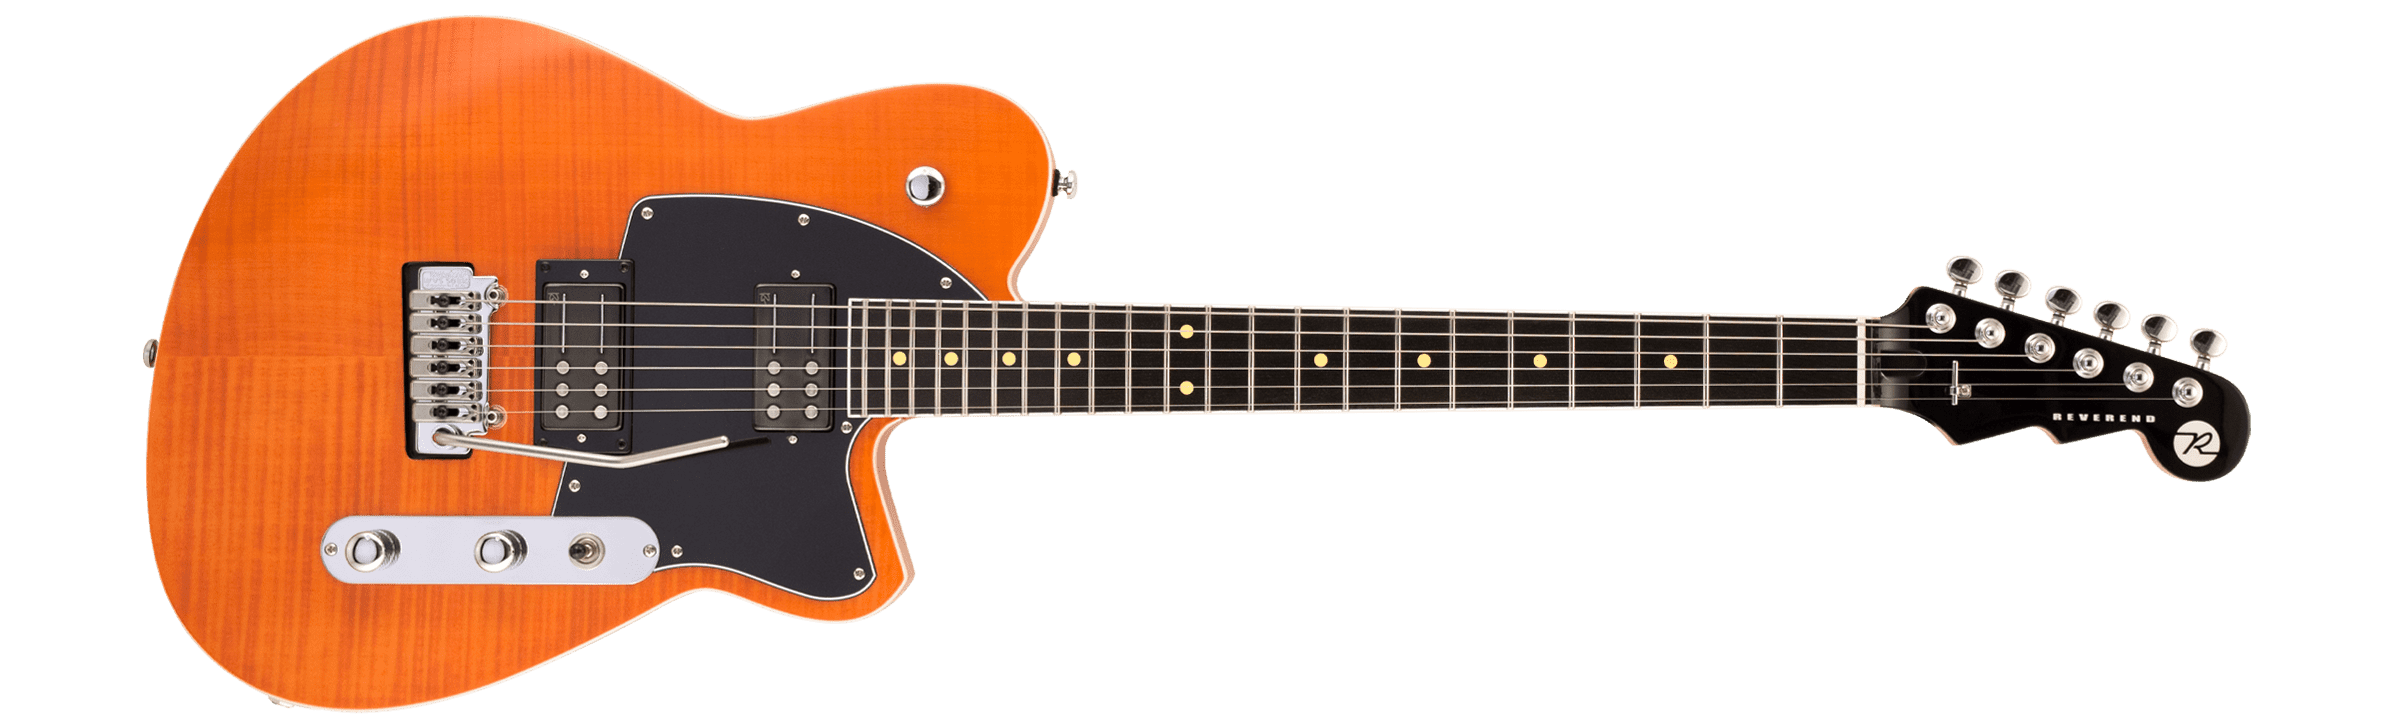 Reeves Gabrels Signature Guitar - Reverend Guitars | We know what 